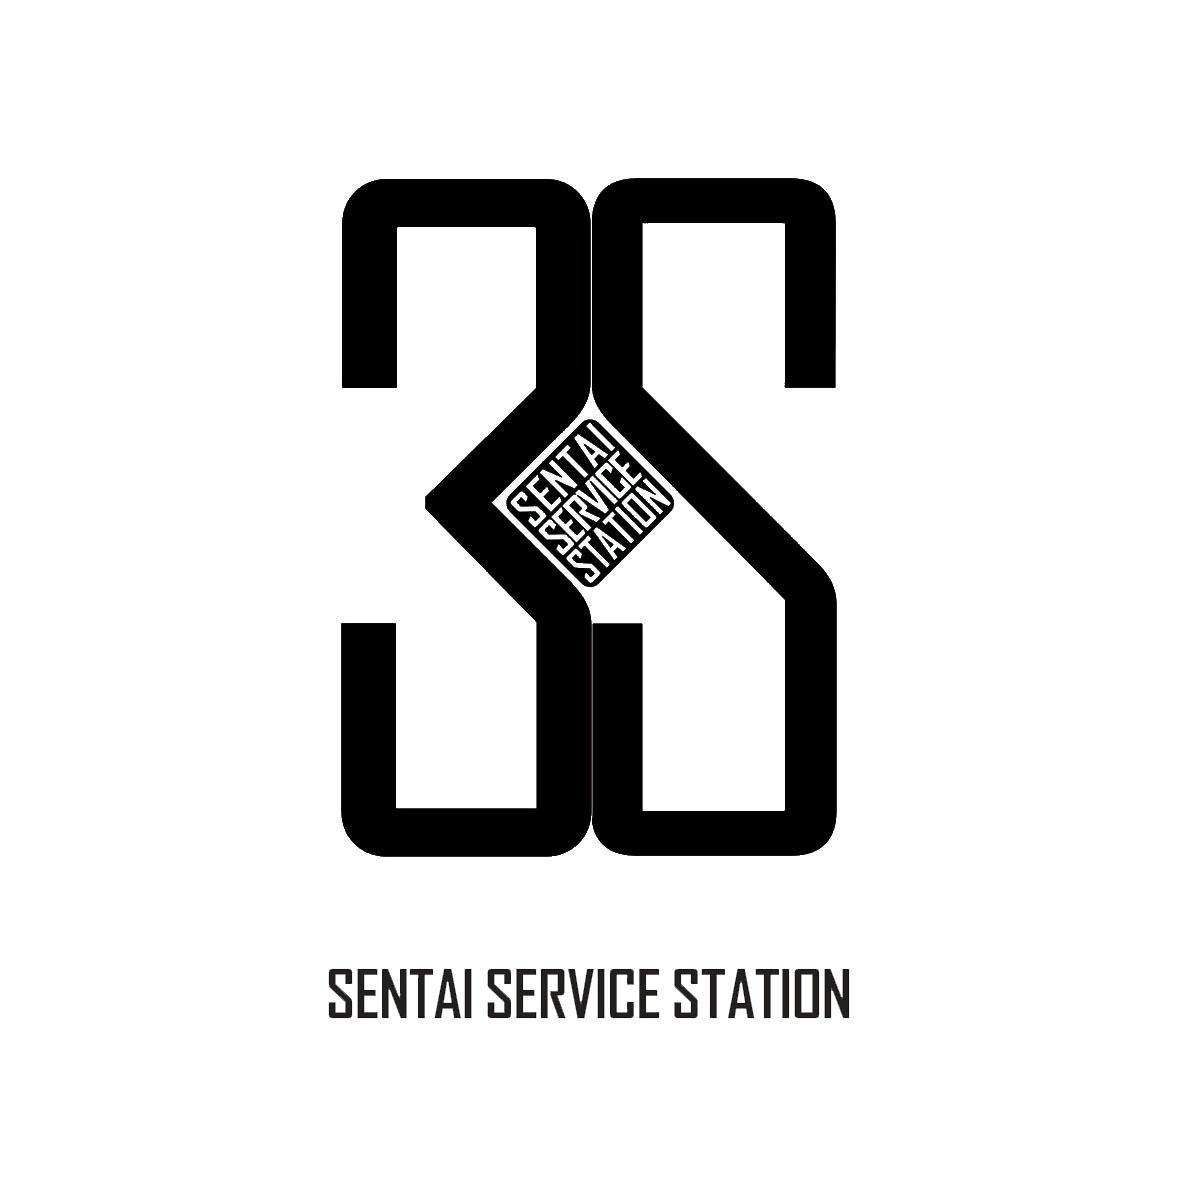 SENTAI SERVICE STATION